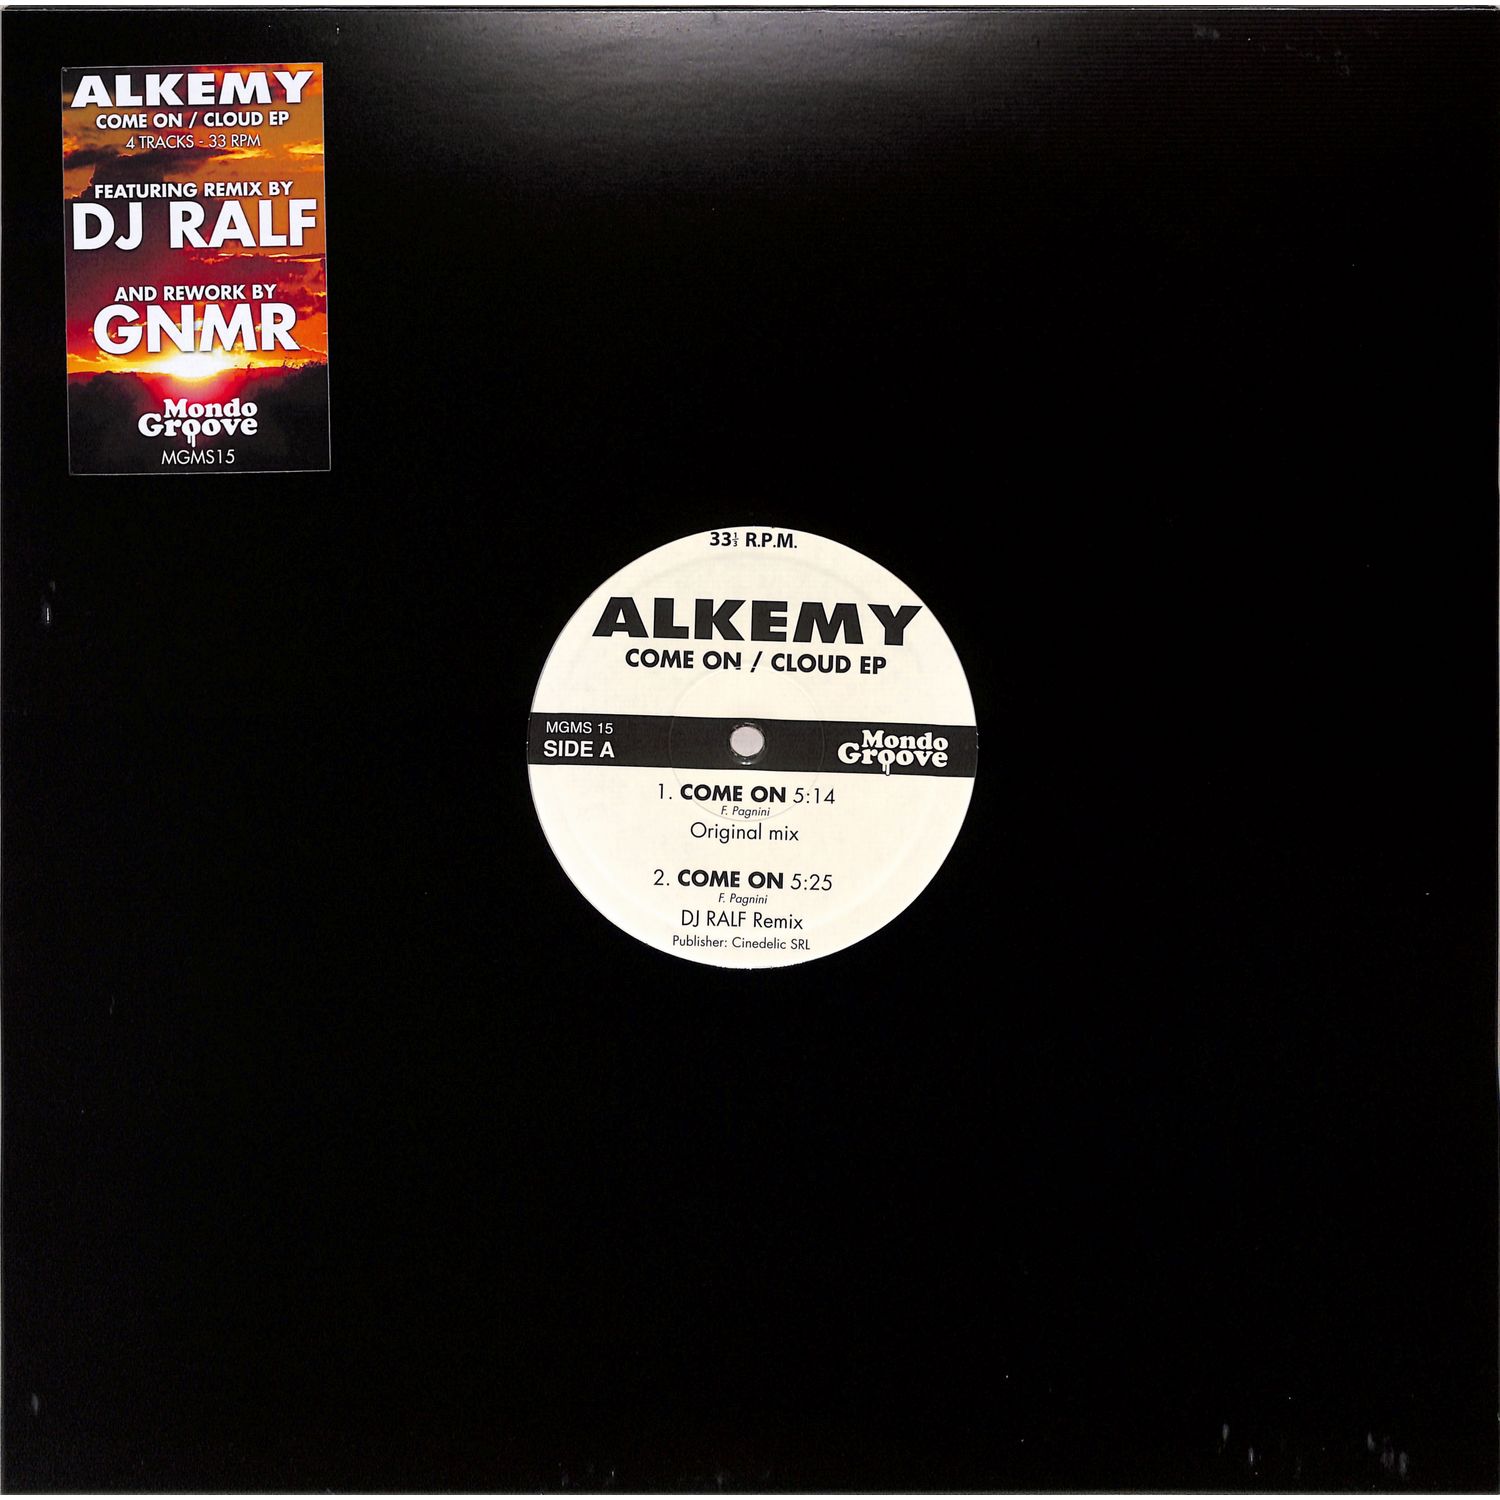 Alkemy feat. DJ Ralf & Gnmr - COME ON / CLOUD EP